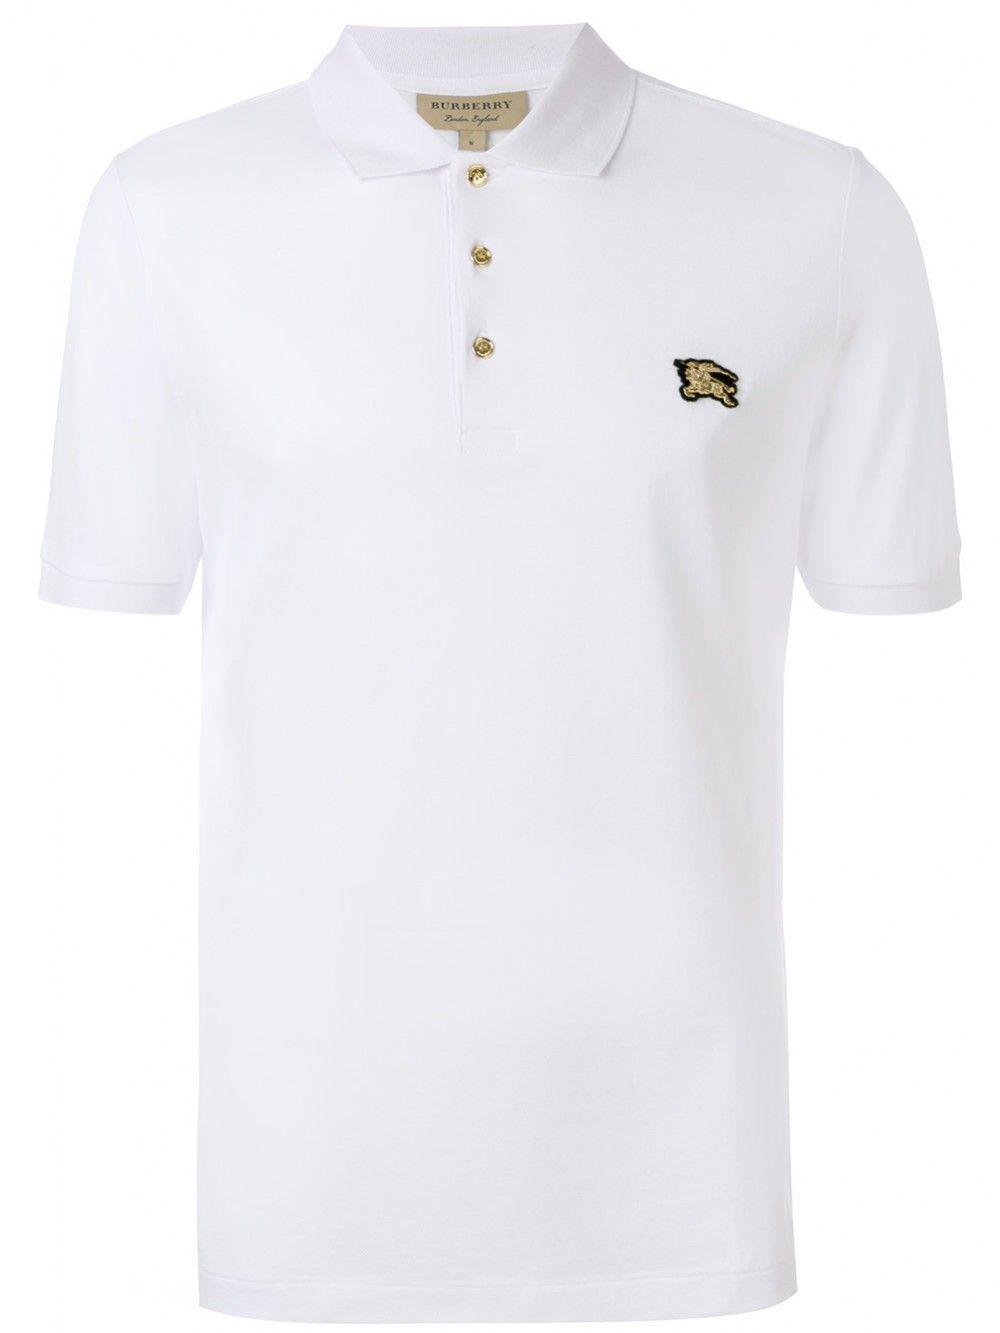 Gold Polo Logo - Burberry Embroidered Logo Polo Shirt $228. LHO